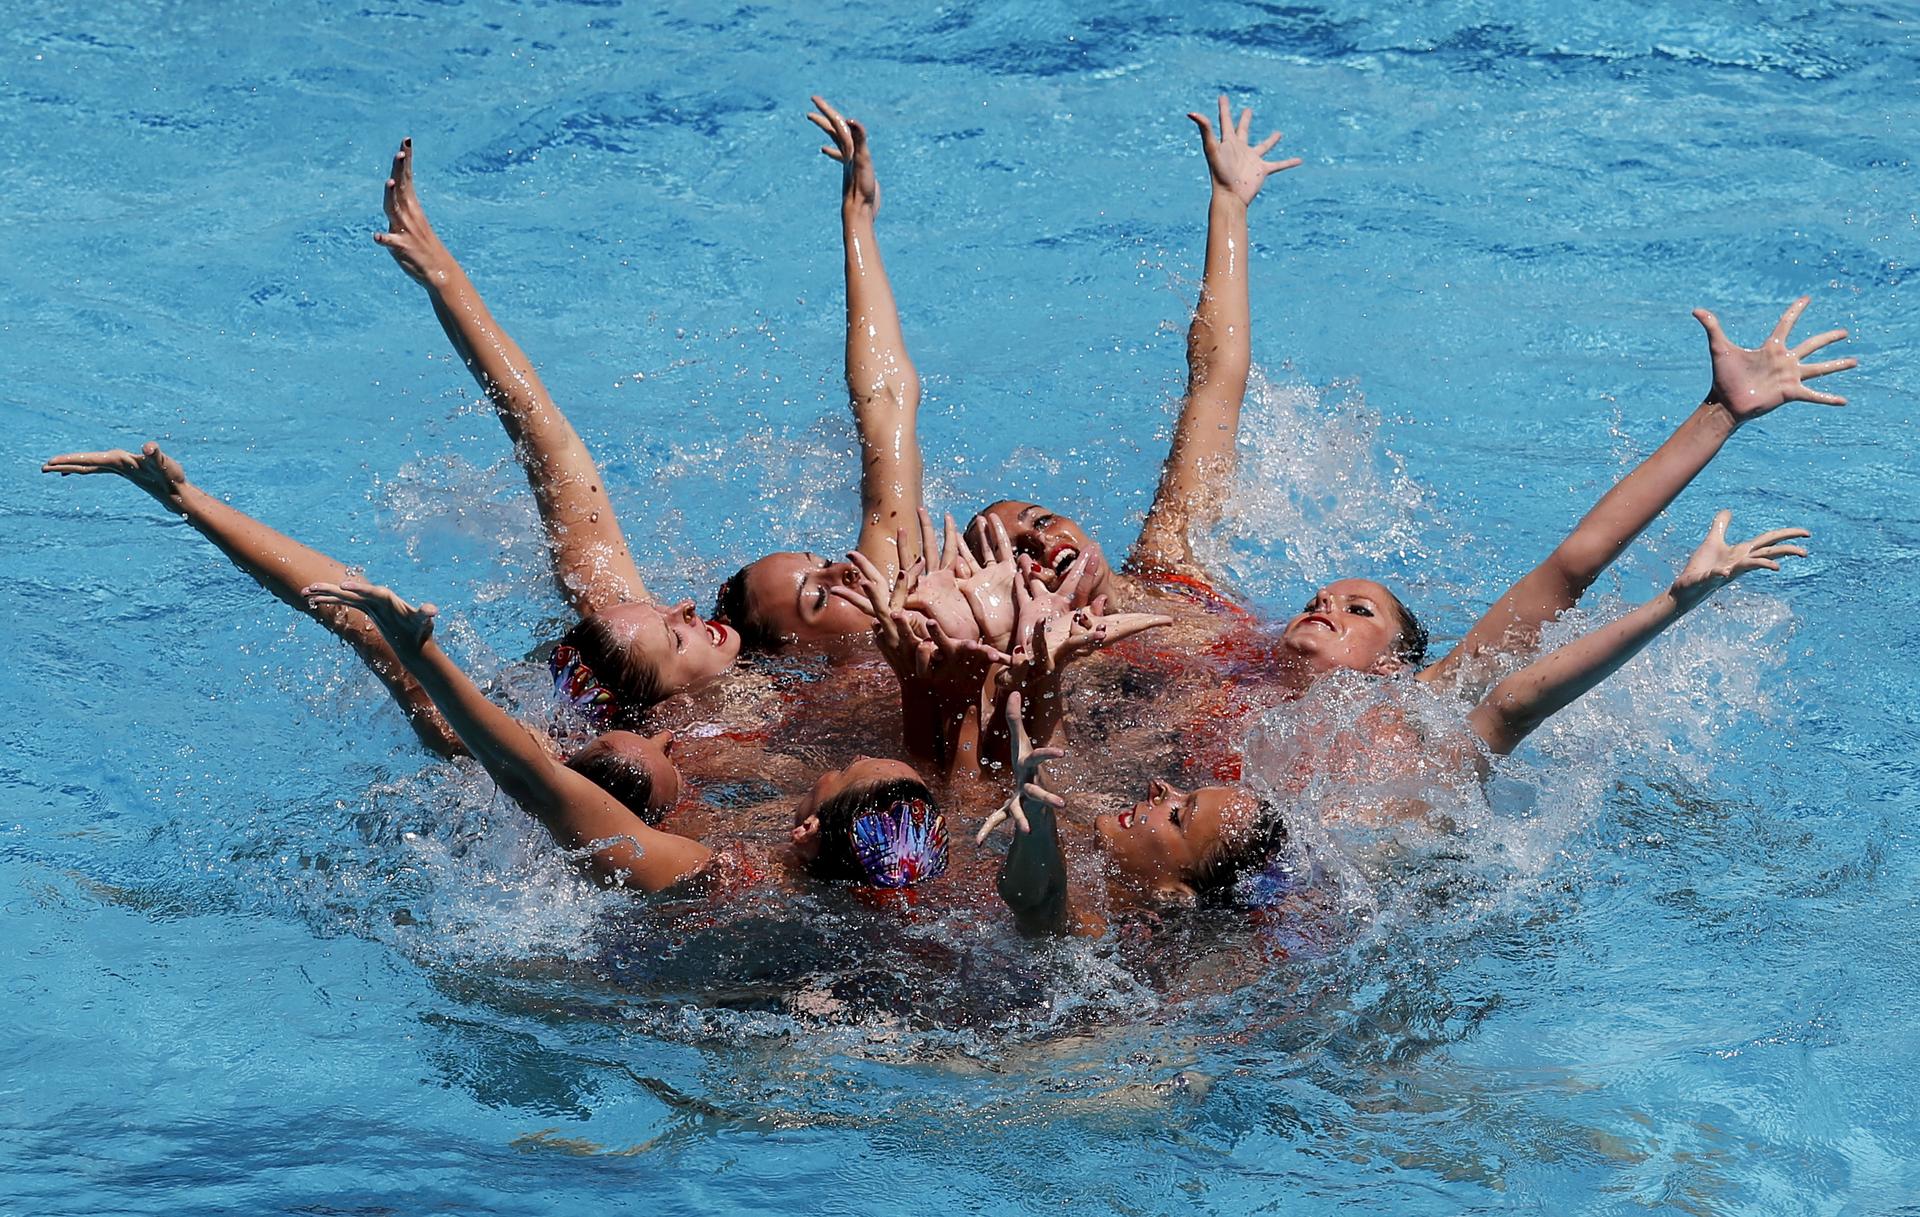 Brazil synchronized swimming